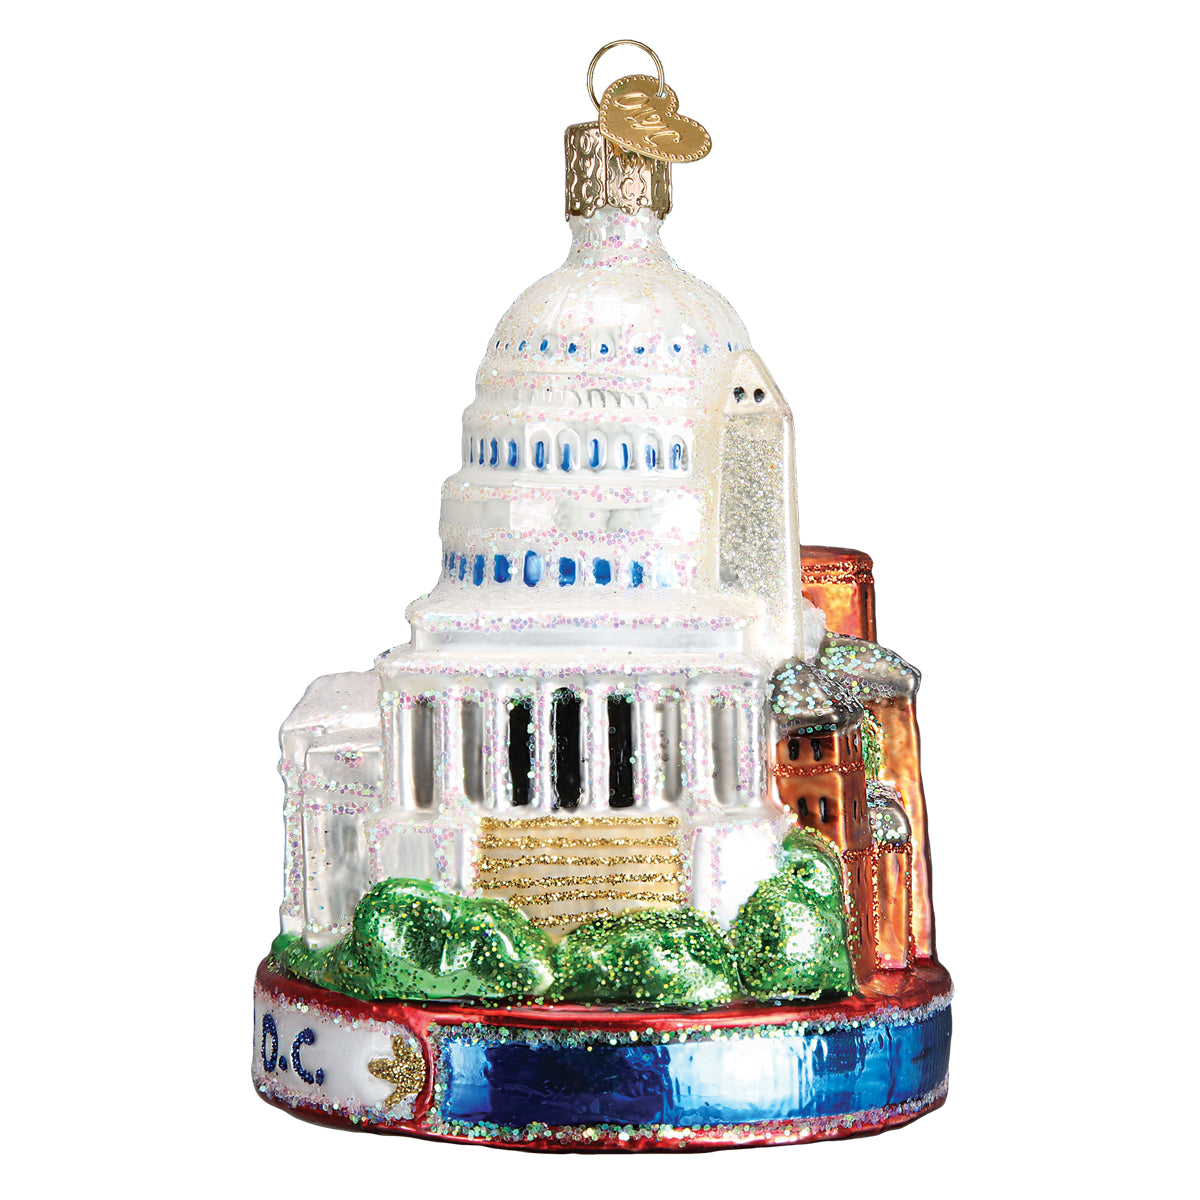 Washington D.C. Ornament